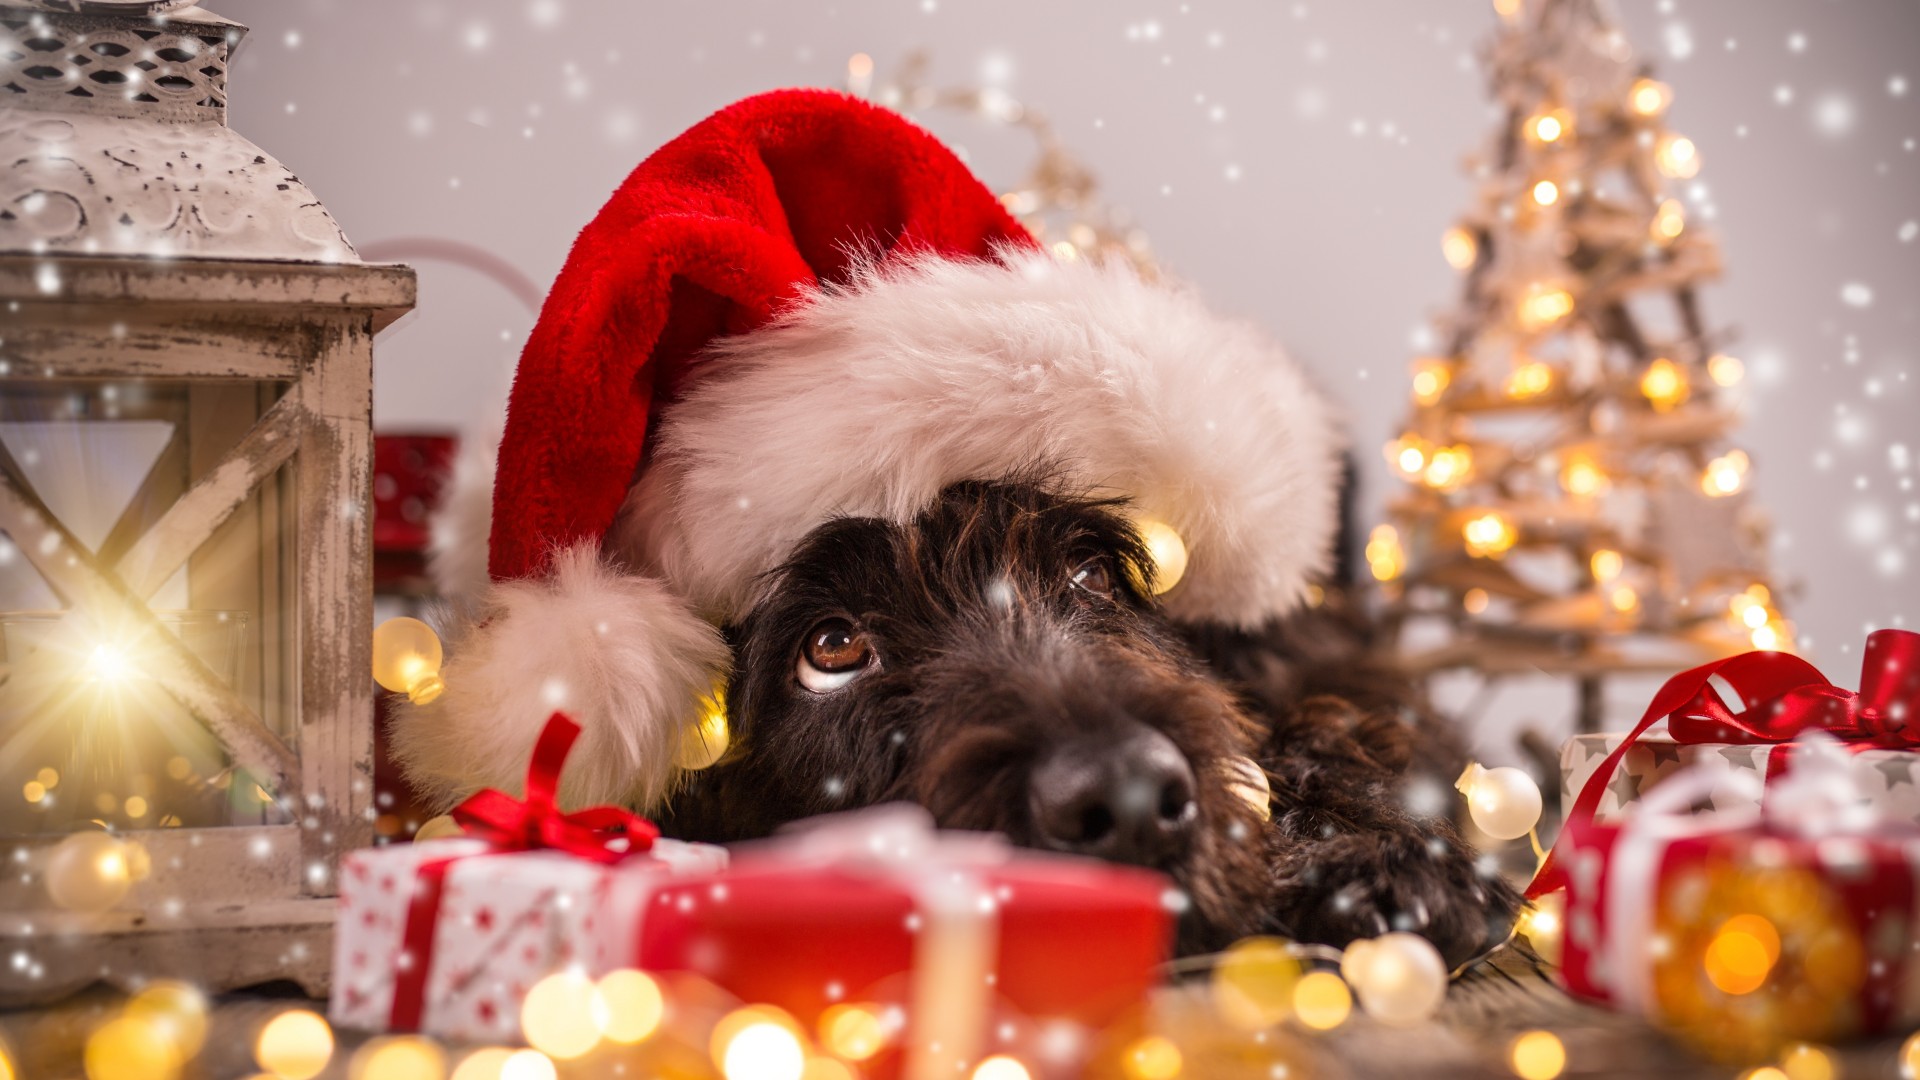 Wallpaper Christmas, New Year, snow, dog, cute animals, 4k, Holidays #16834